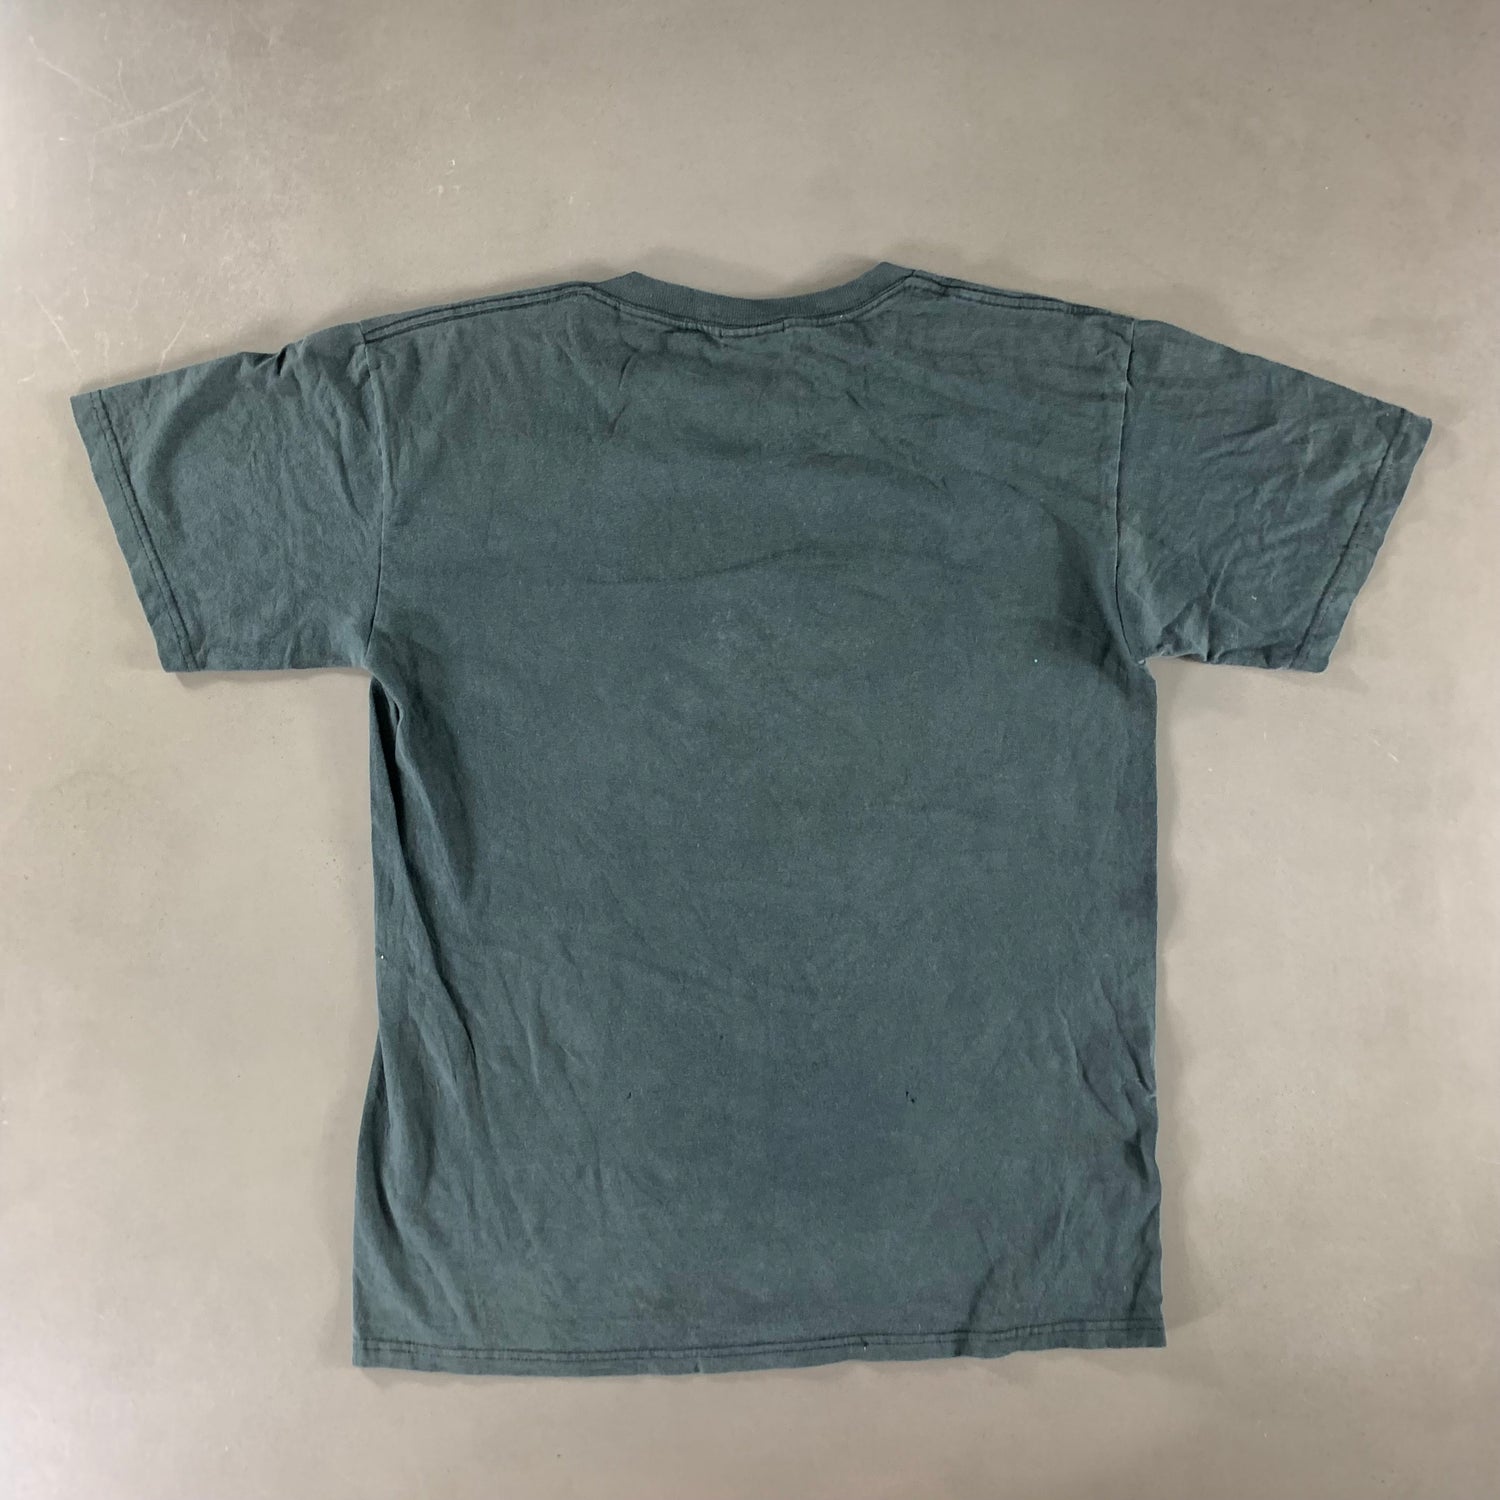 Vintage 1995 Philadelphia Phillies T-shirt size Medium